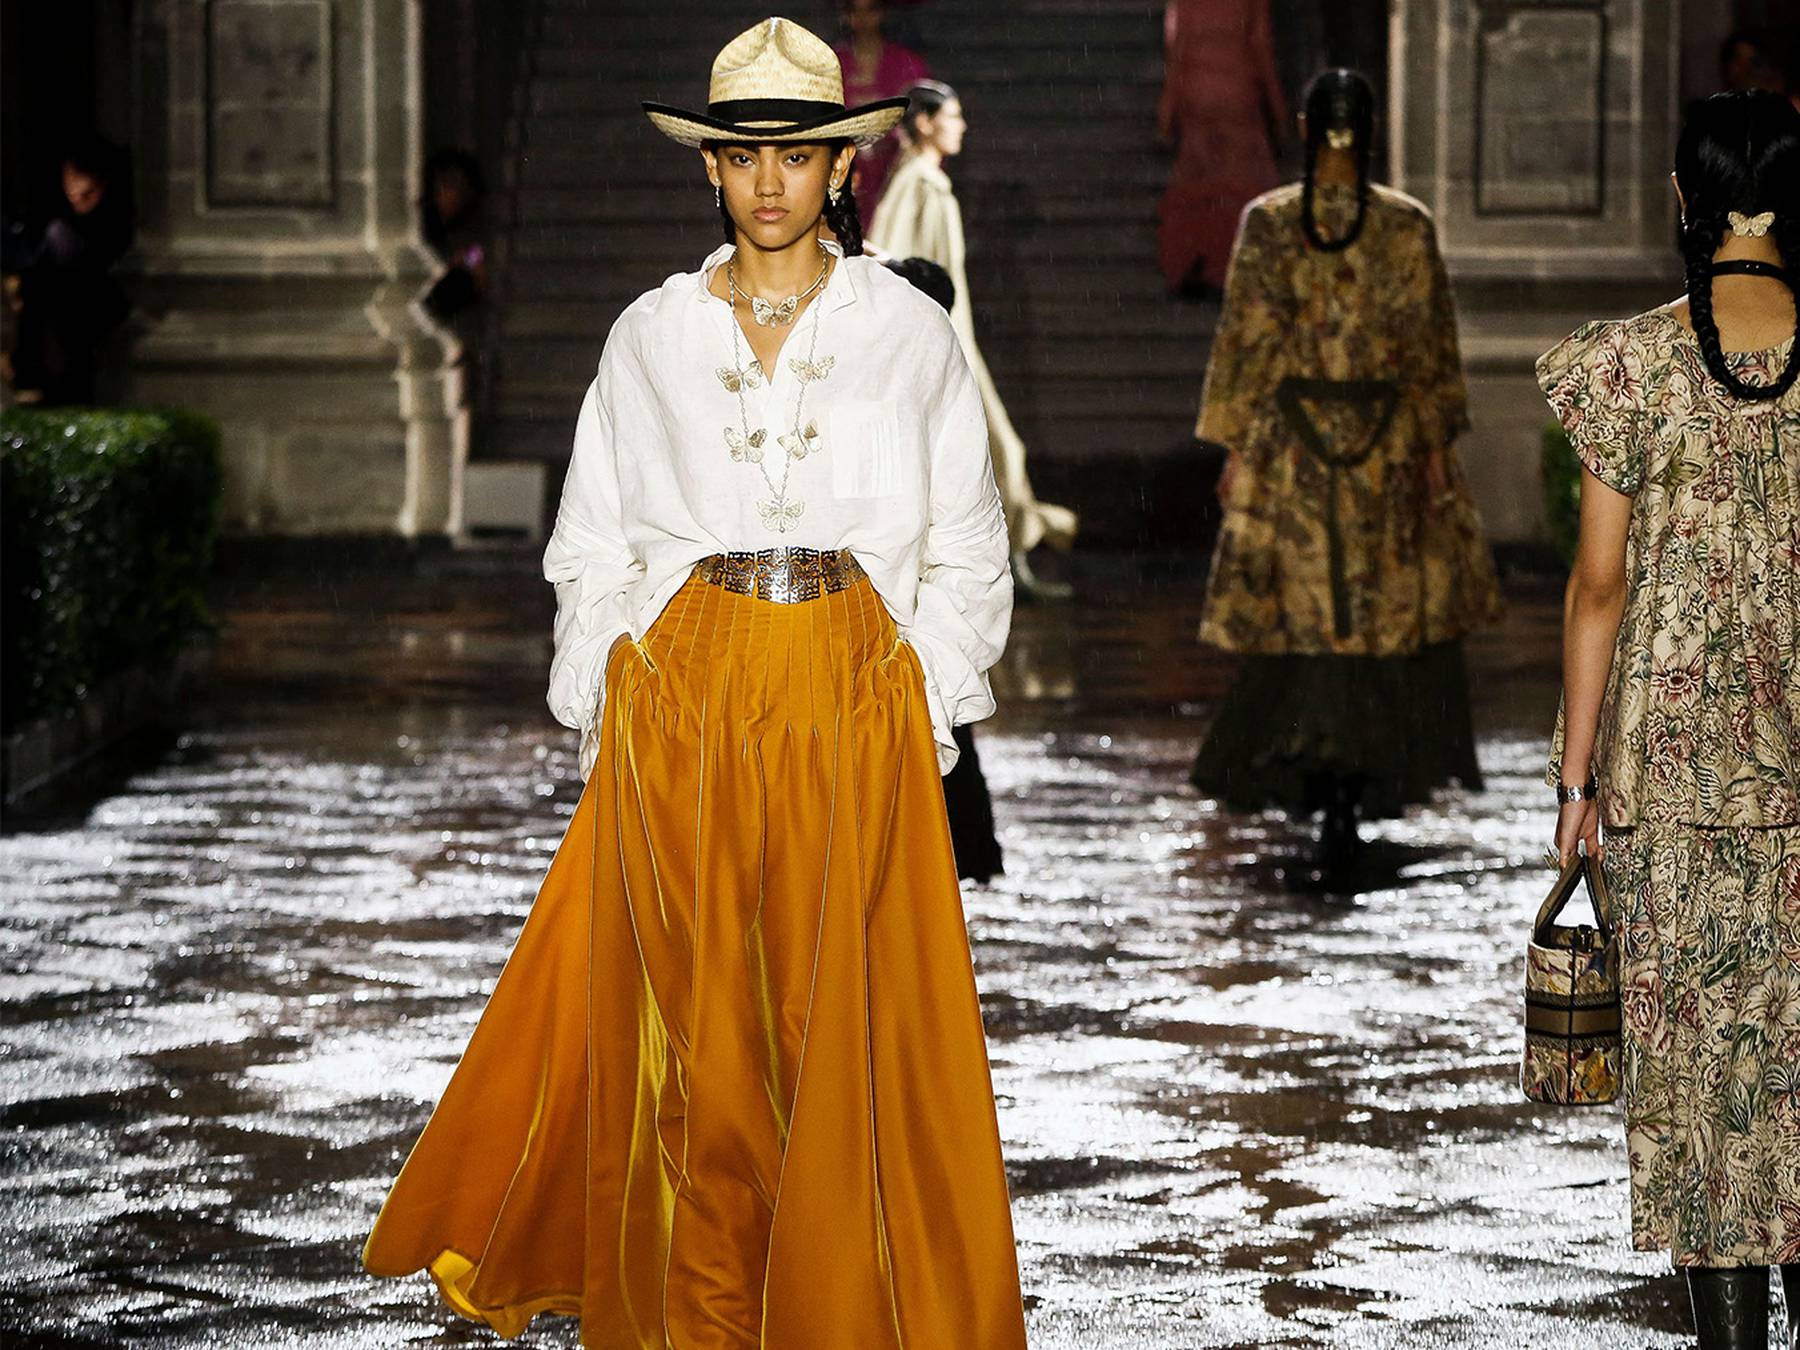 Cariatides Couture as Christian Dior prepares for restoration